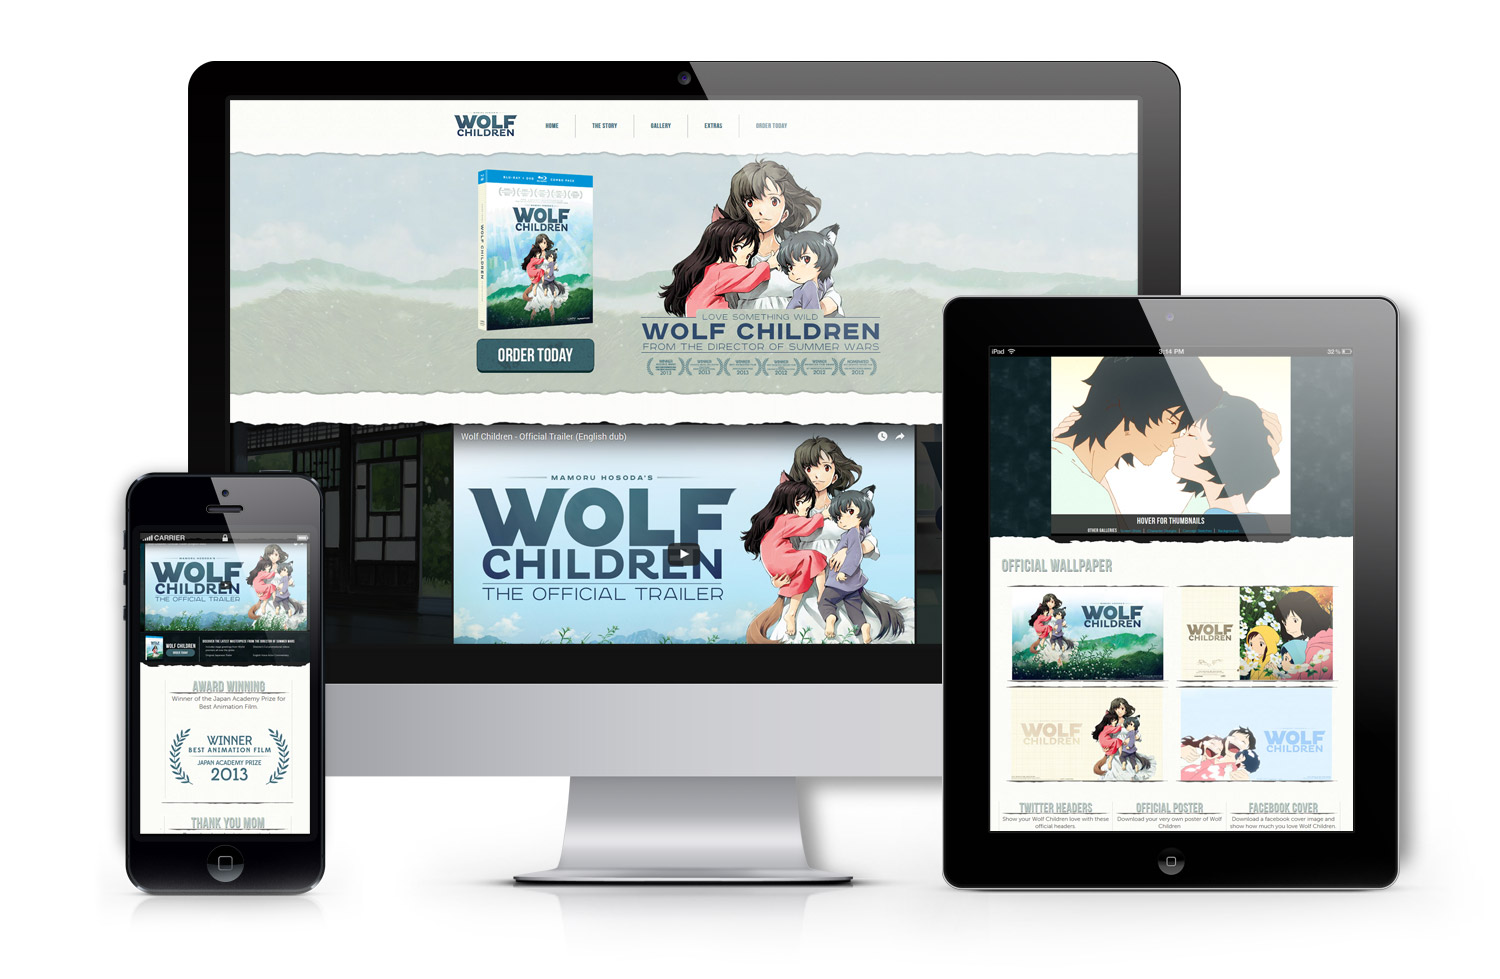 Wolf Children's fullscreen image